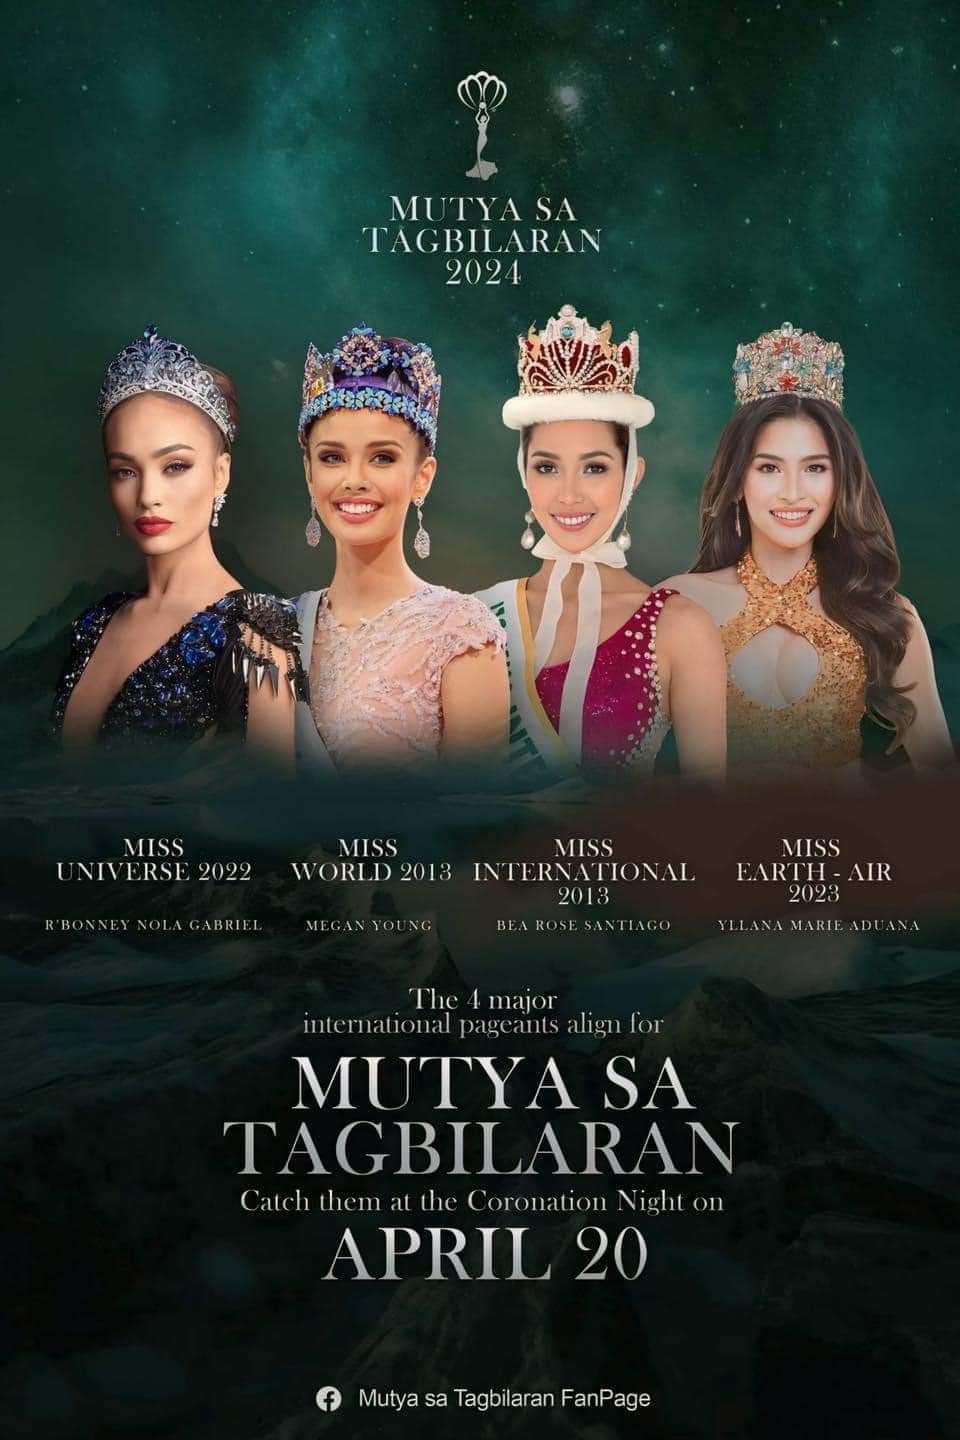 Mutya sa Tagbilaran 2024: Miss U 2022 R’ Bonney Nola Gabriel, Bea Rose Santiago to motovlogger Jet Lee; who are judges for the Mutya pageant finale